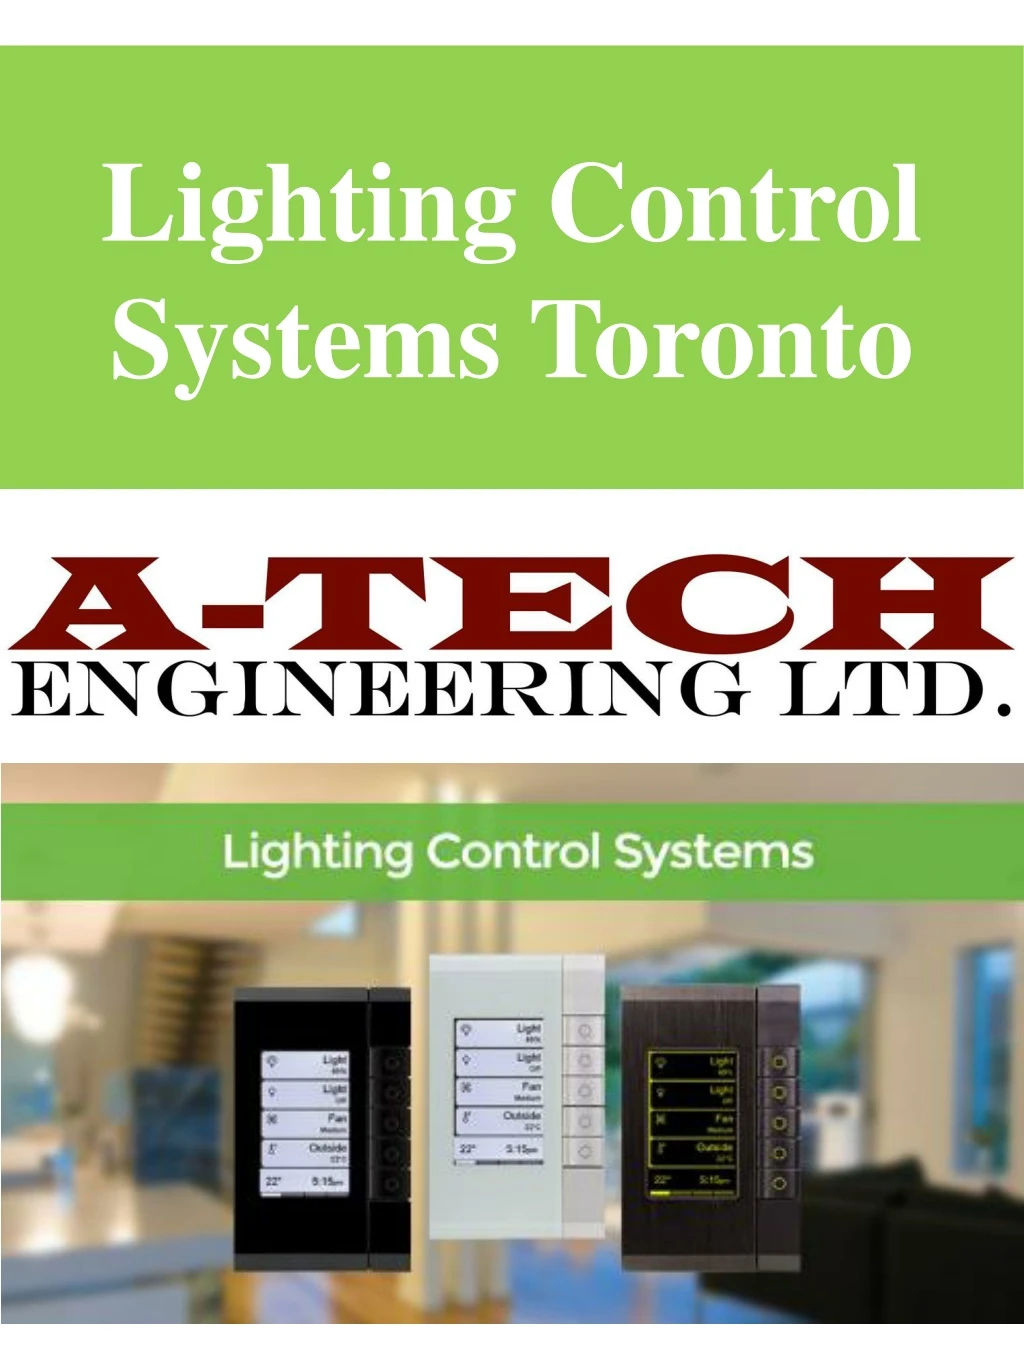 lighting control systems toronto